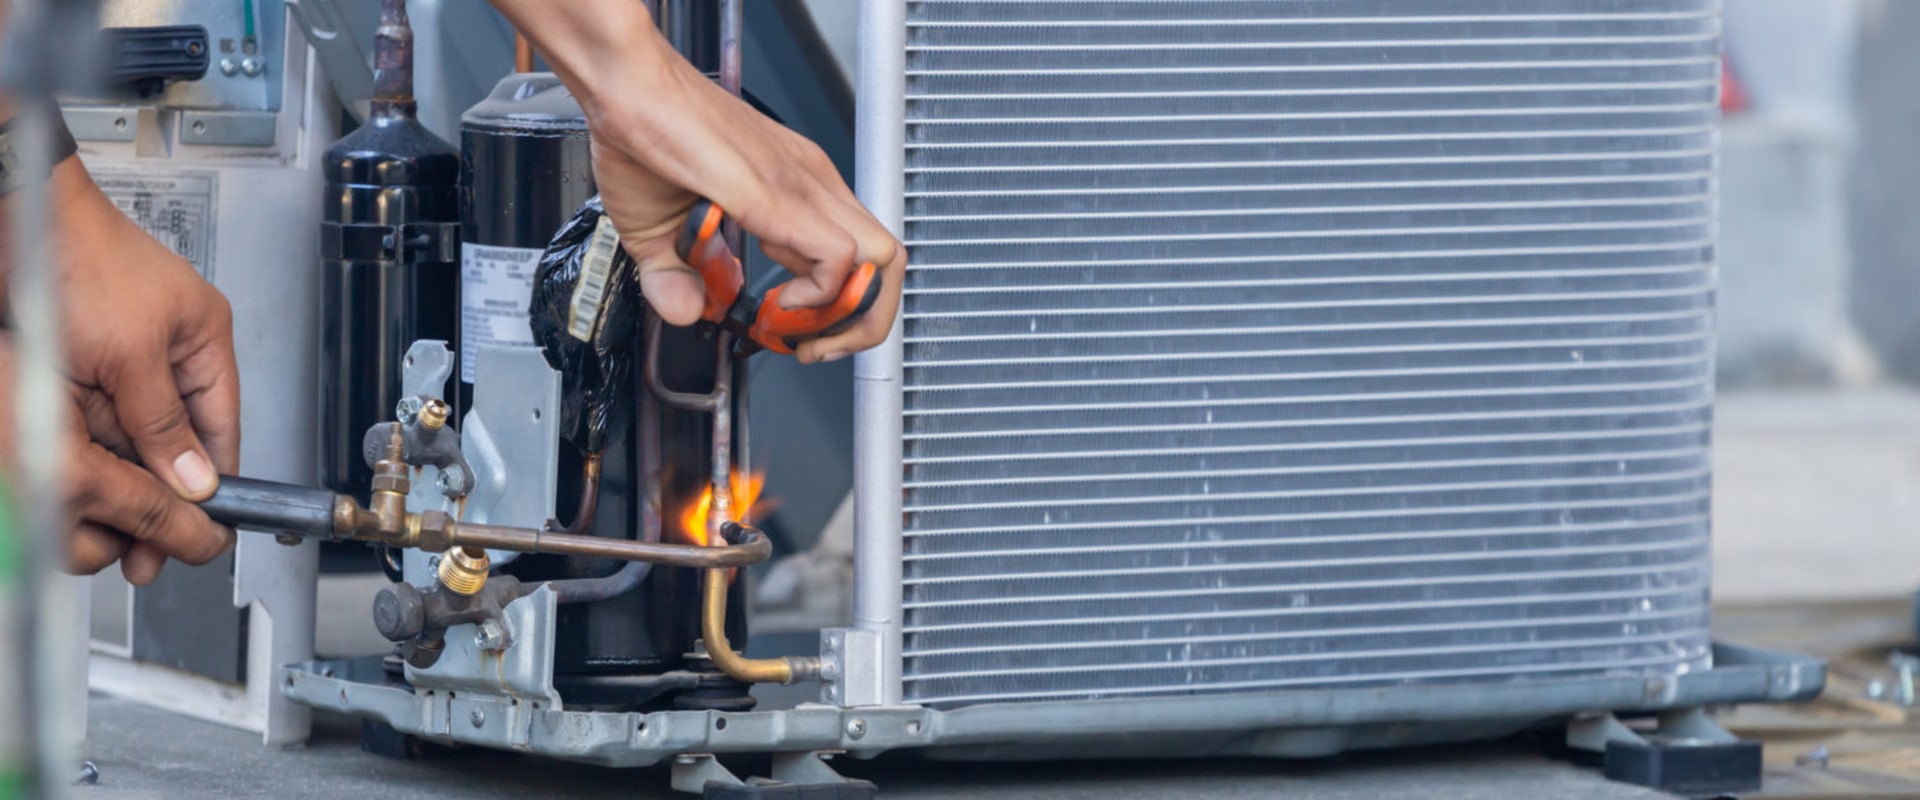 Do HVAC Systems Need Regular Maintenance? - The Benefits of Preventive Maintenance